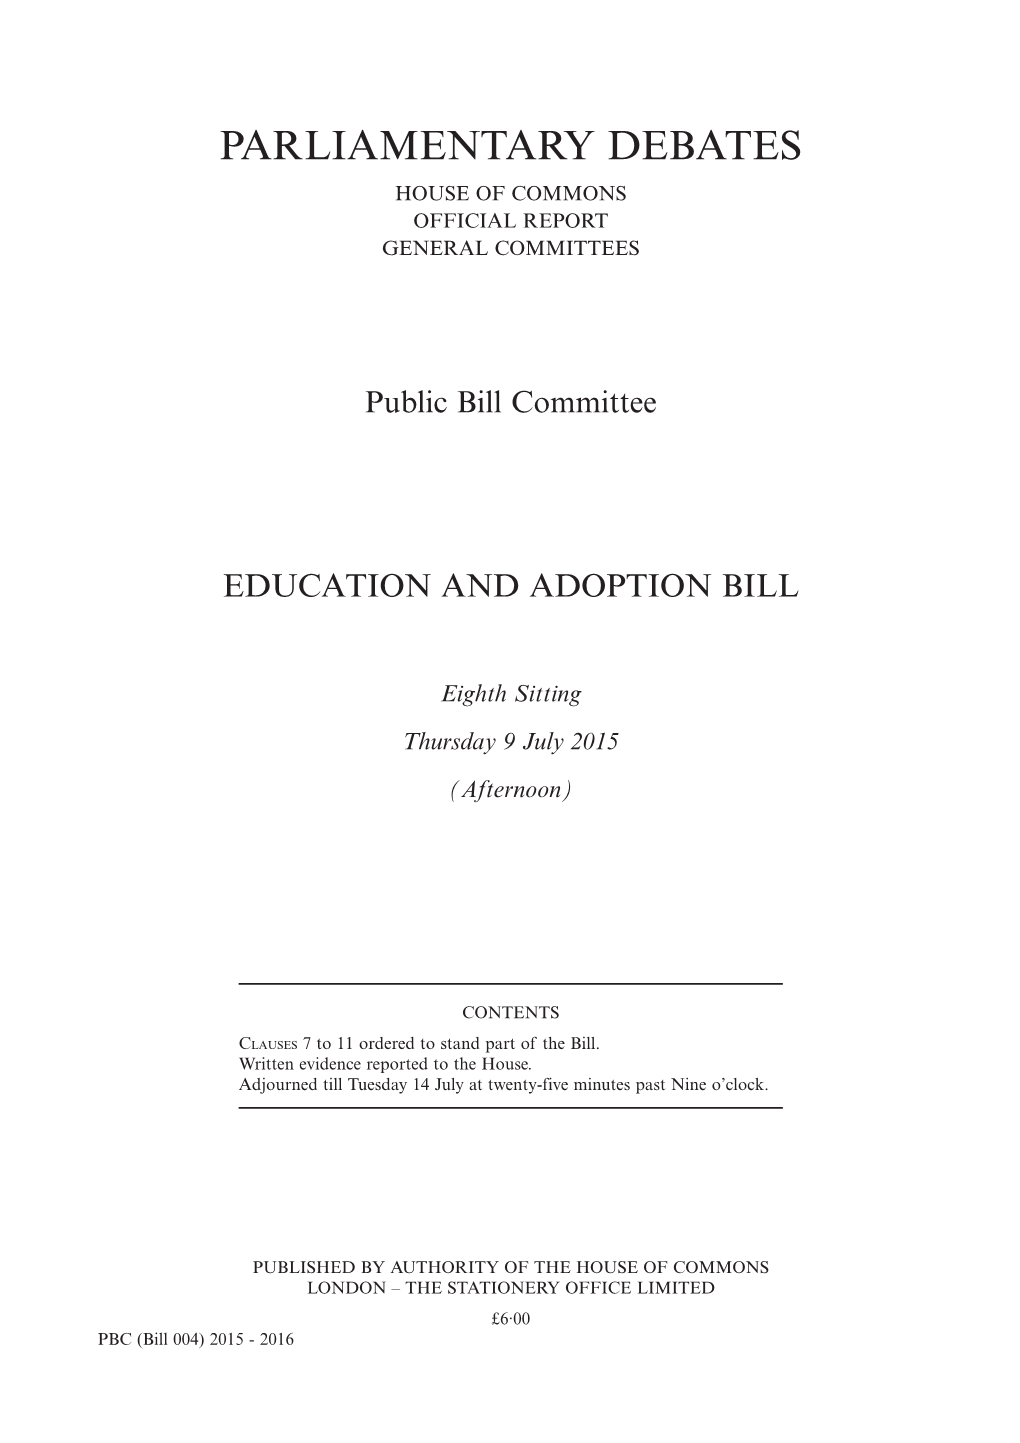 Education and Adoption Bill